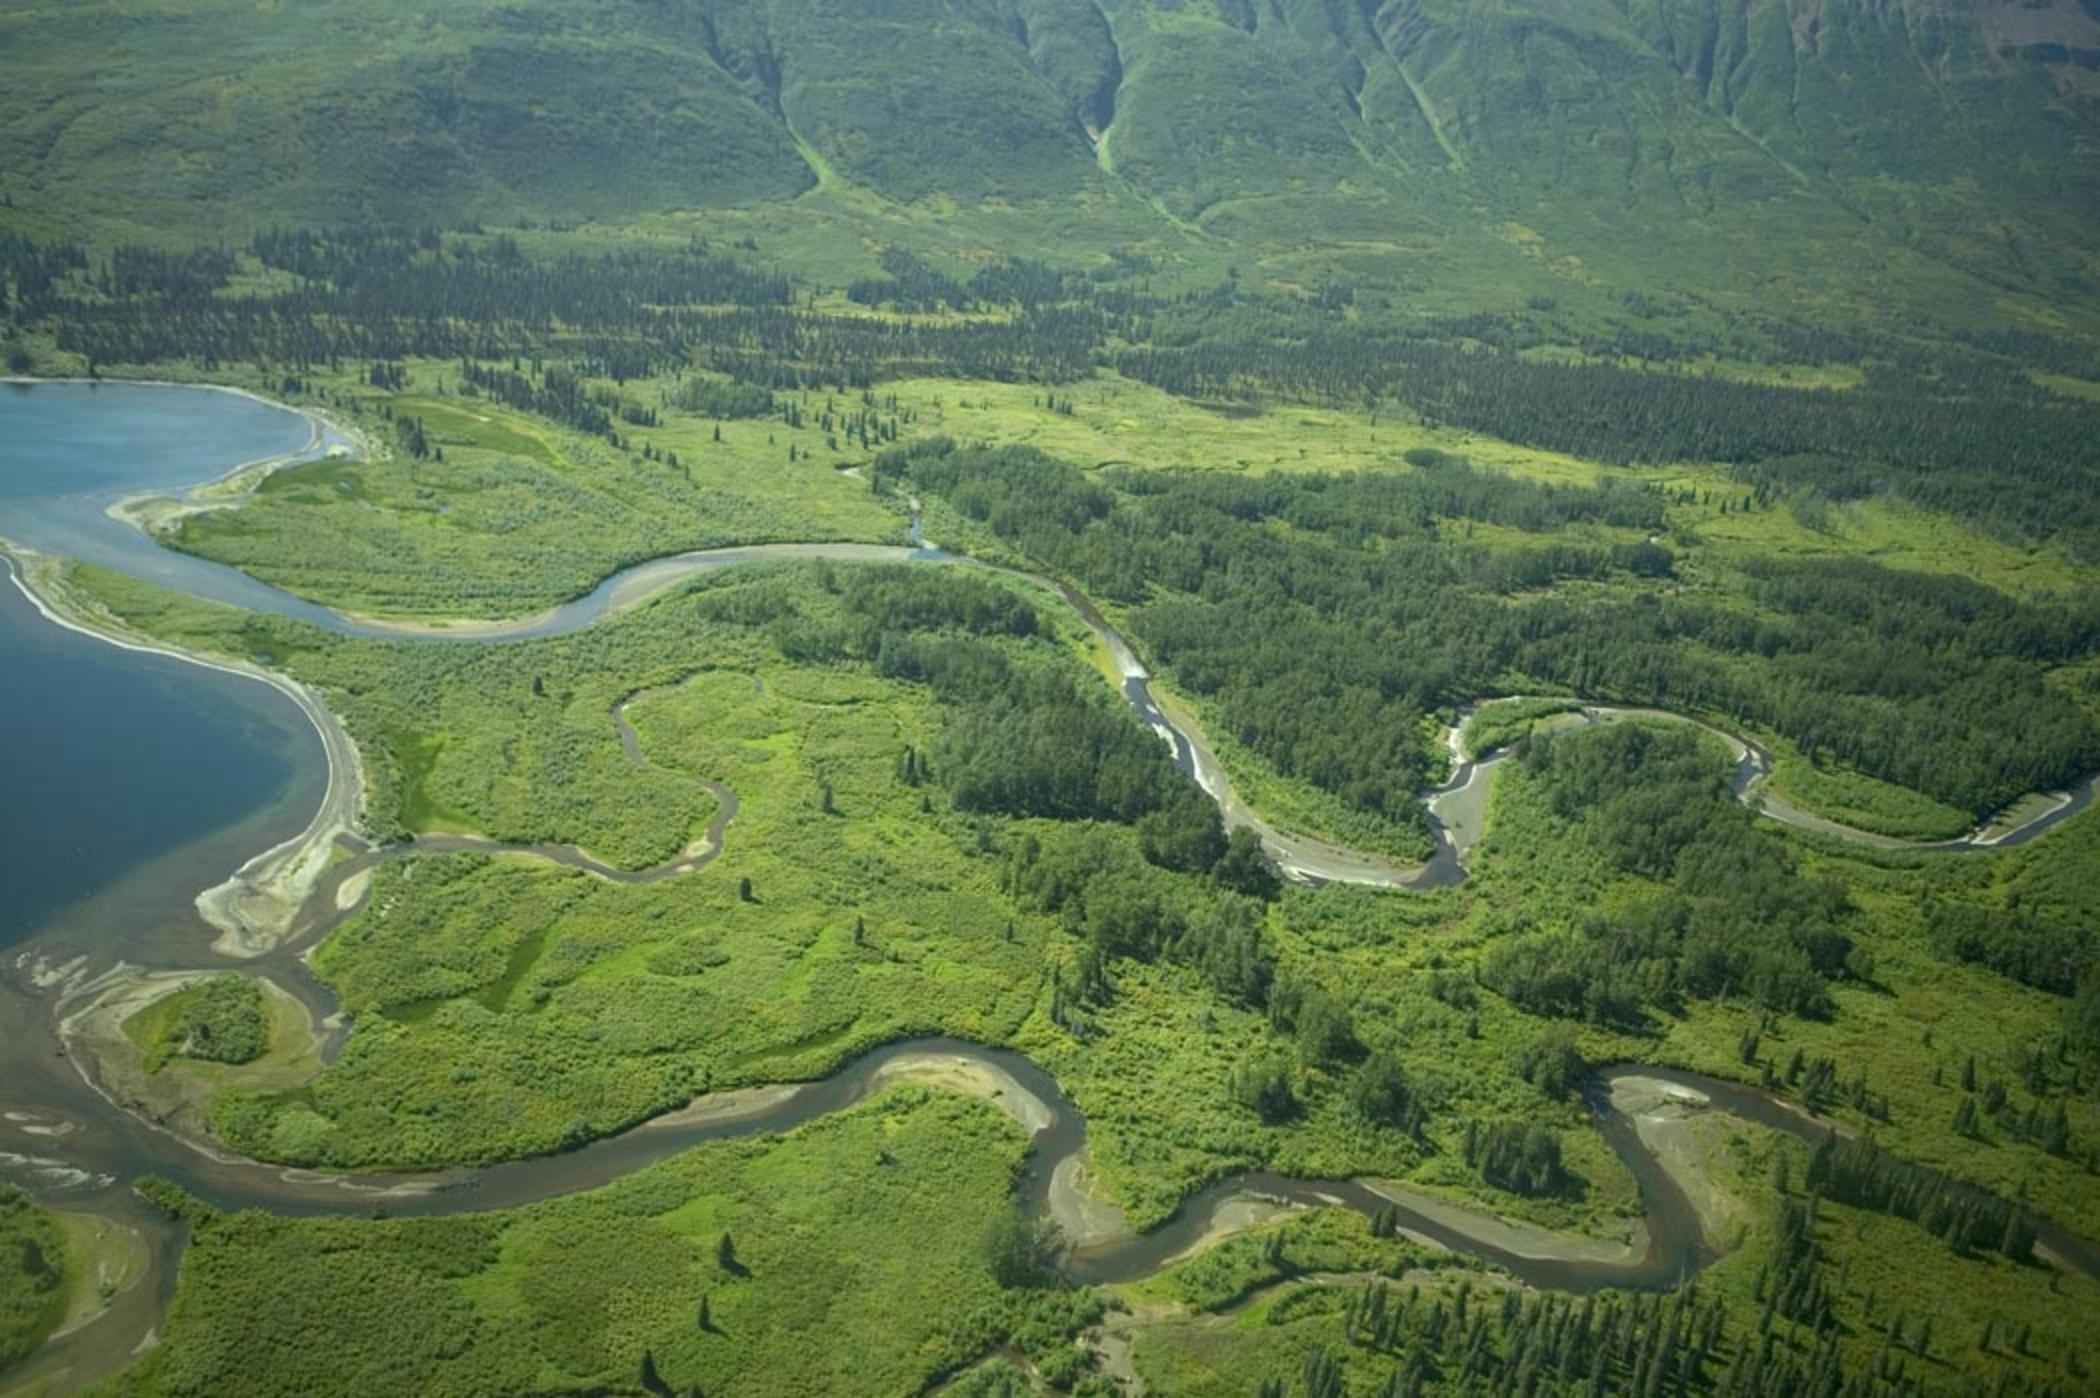 meander meandering river3 pixnio landscapes poustinia rijk kronos